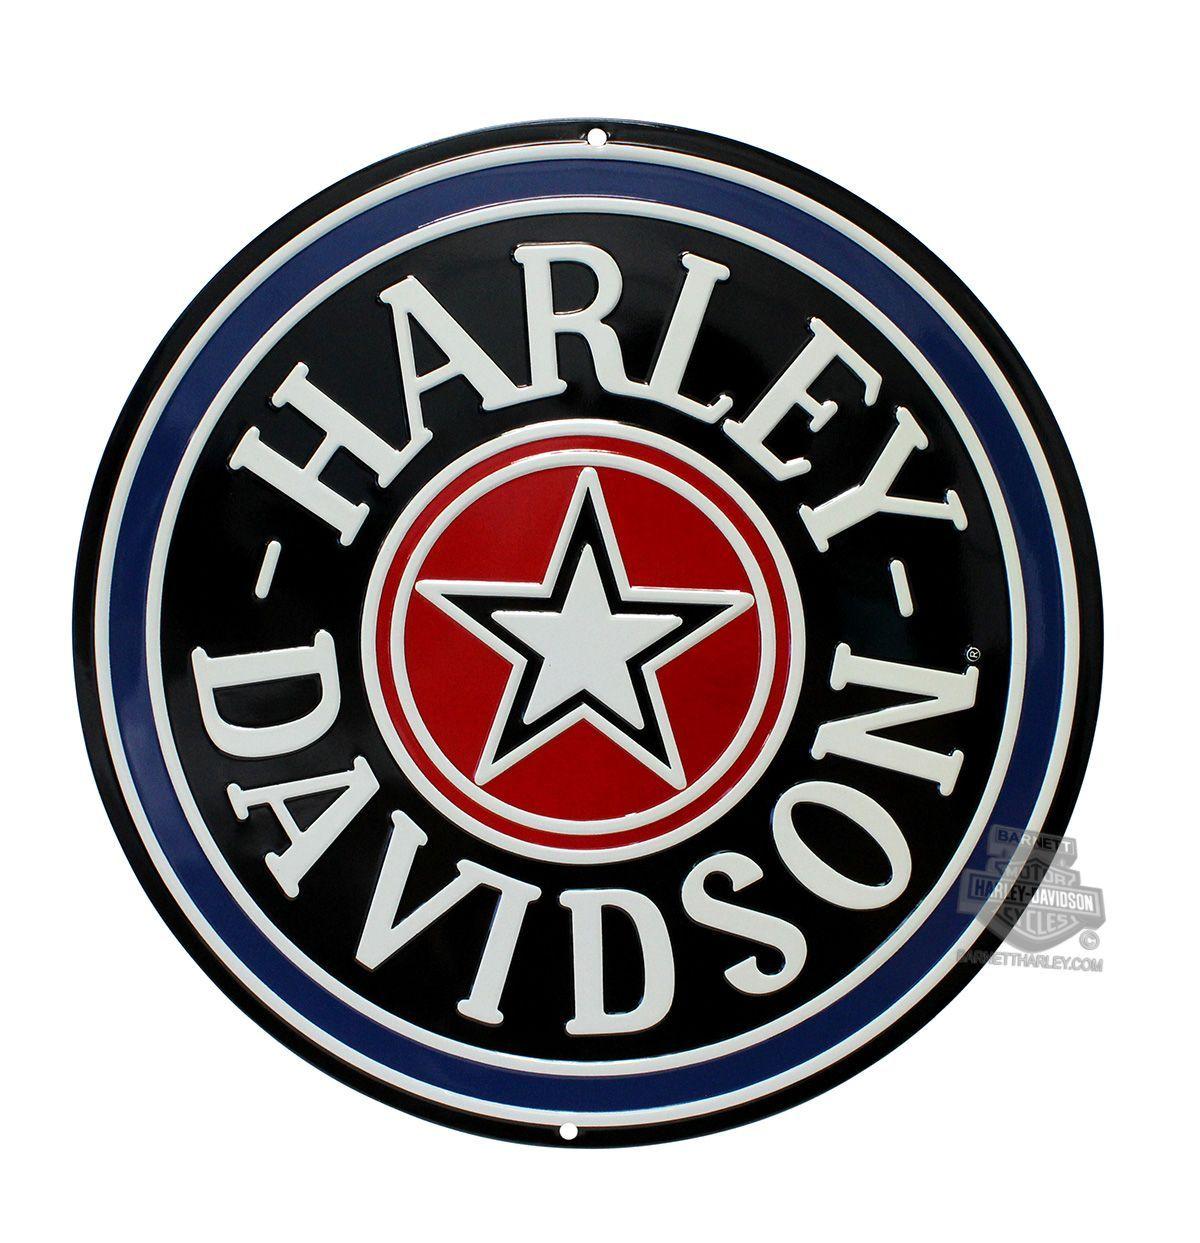 Harley-Davidson Logo - harley davidson logo - Поиск в Google … | Harley Davidson ...